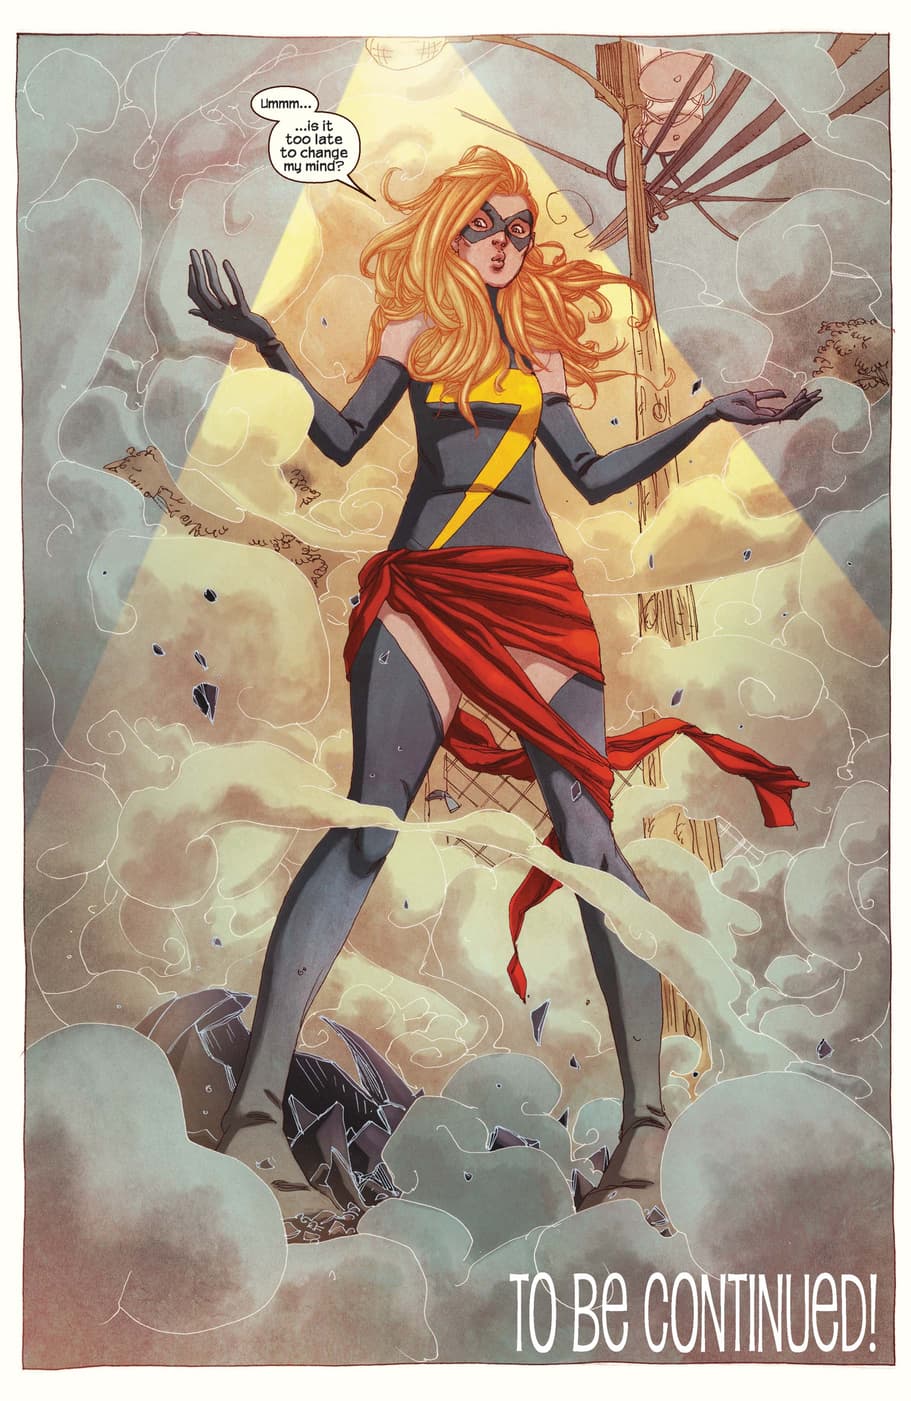 MS. MARVEL (2014) #1 Ms. Marvel